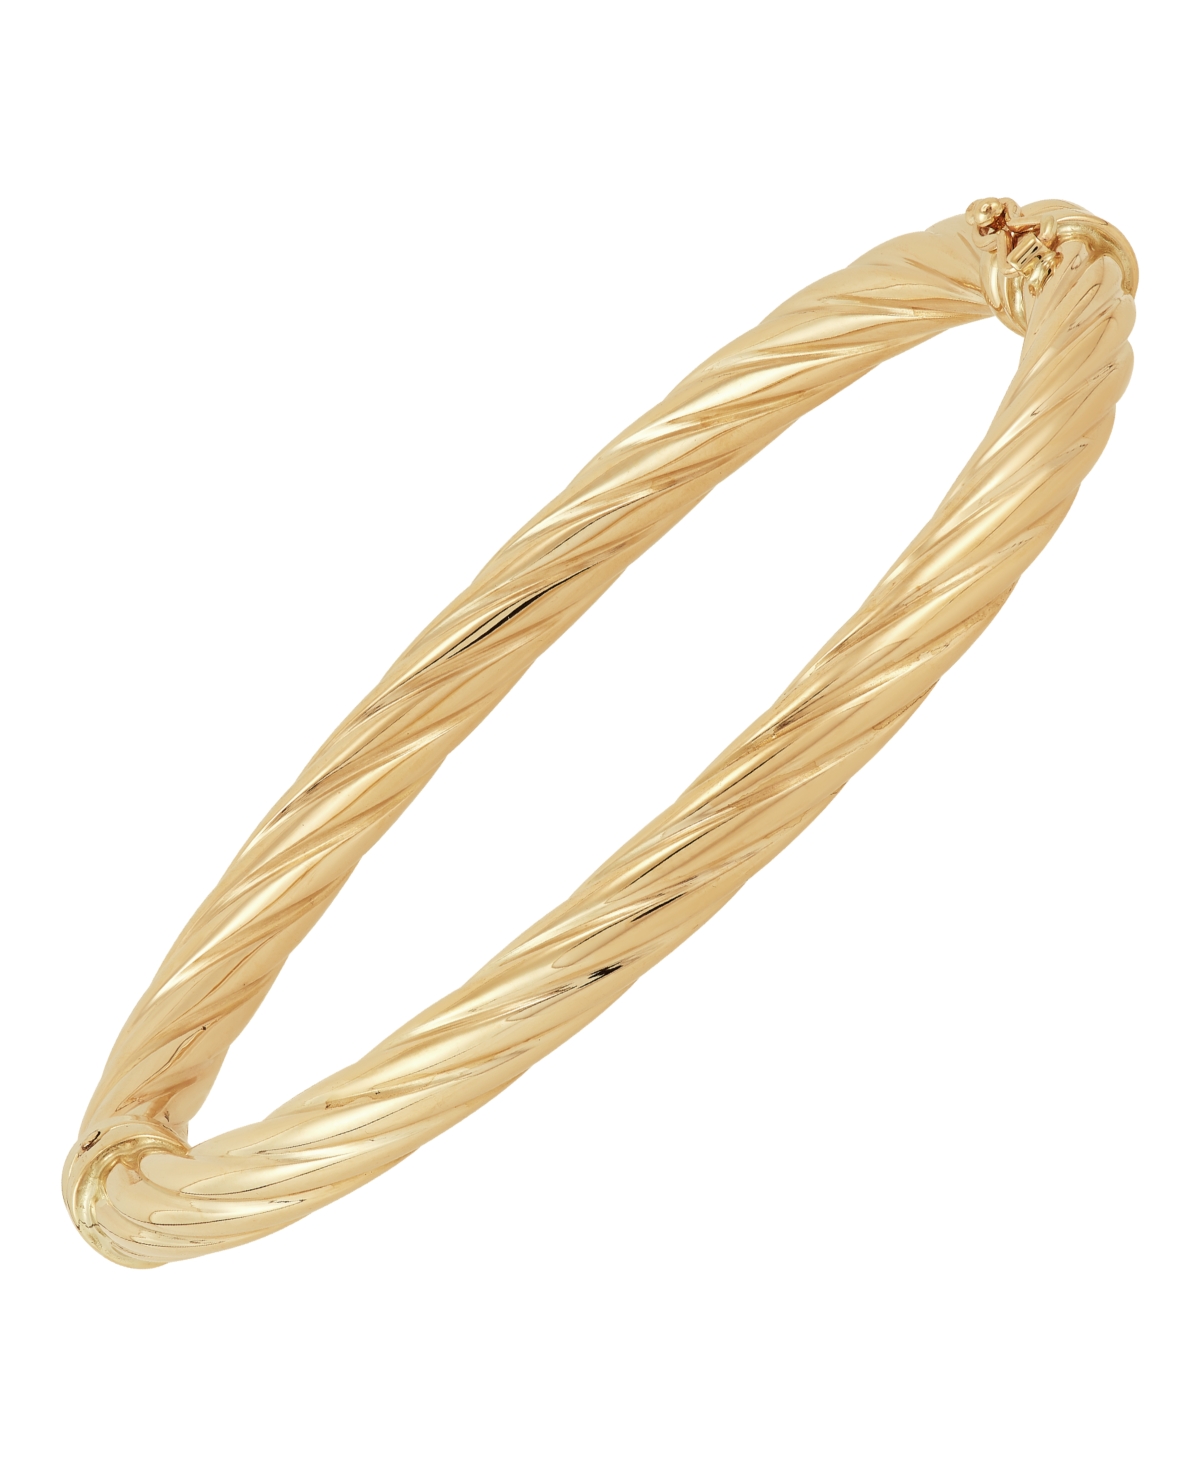 Twist Hinge Bangle Bracelet in 14k Gold or White Gold - Gold